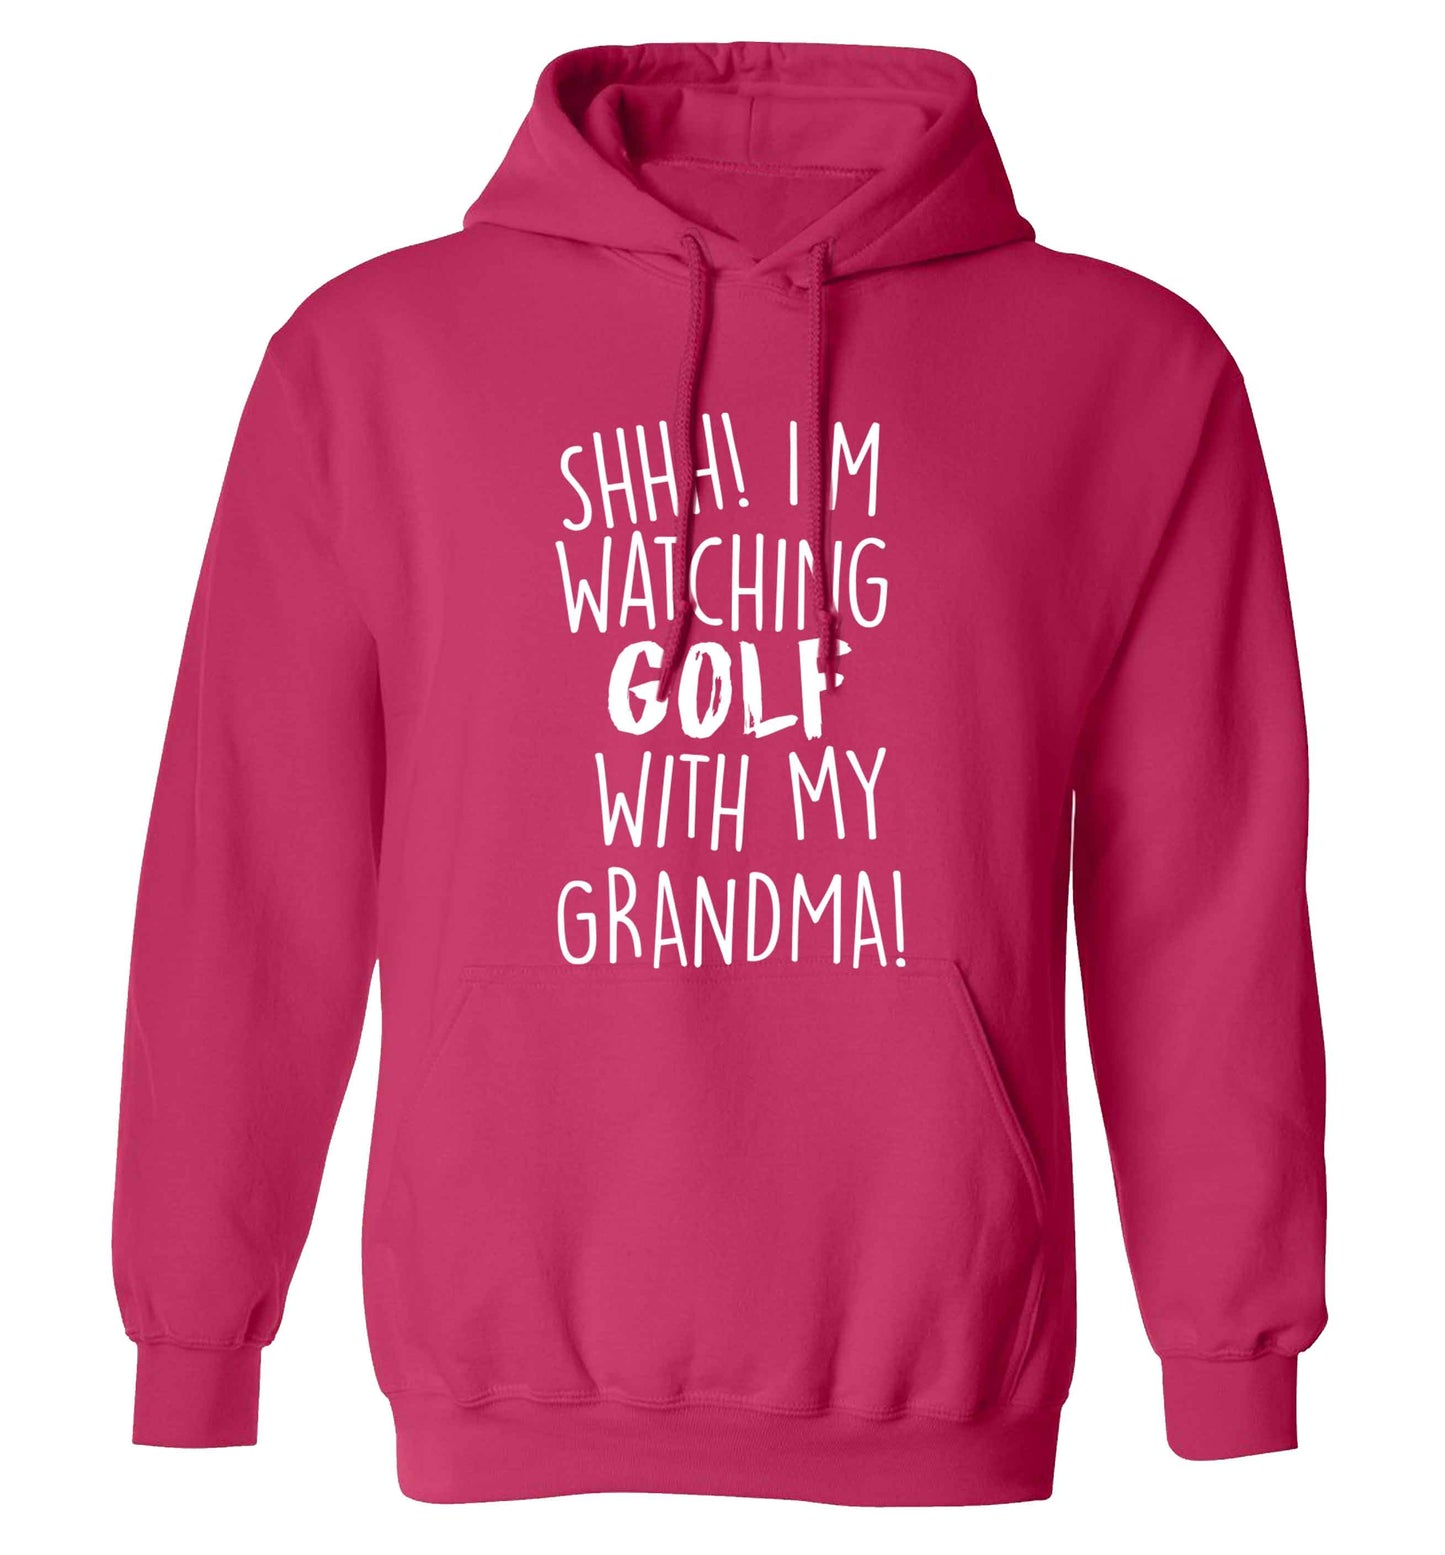 Shh I'm watching golf with my grandma adults unisex pink hoodie 2XL